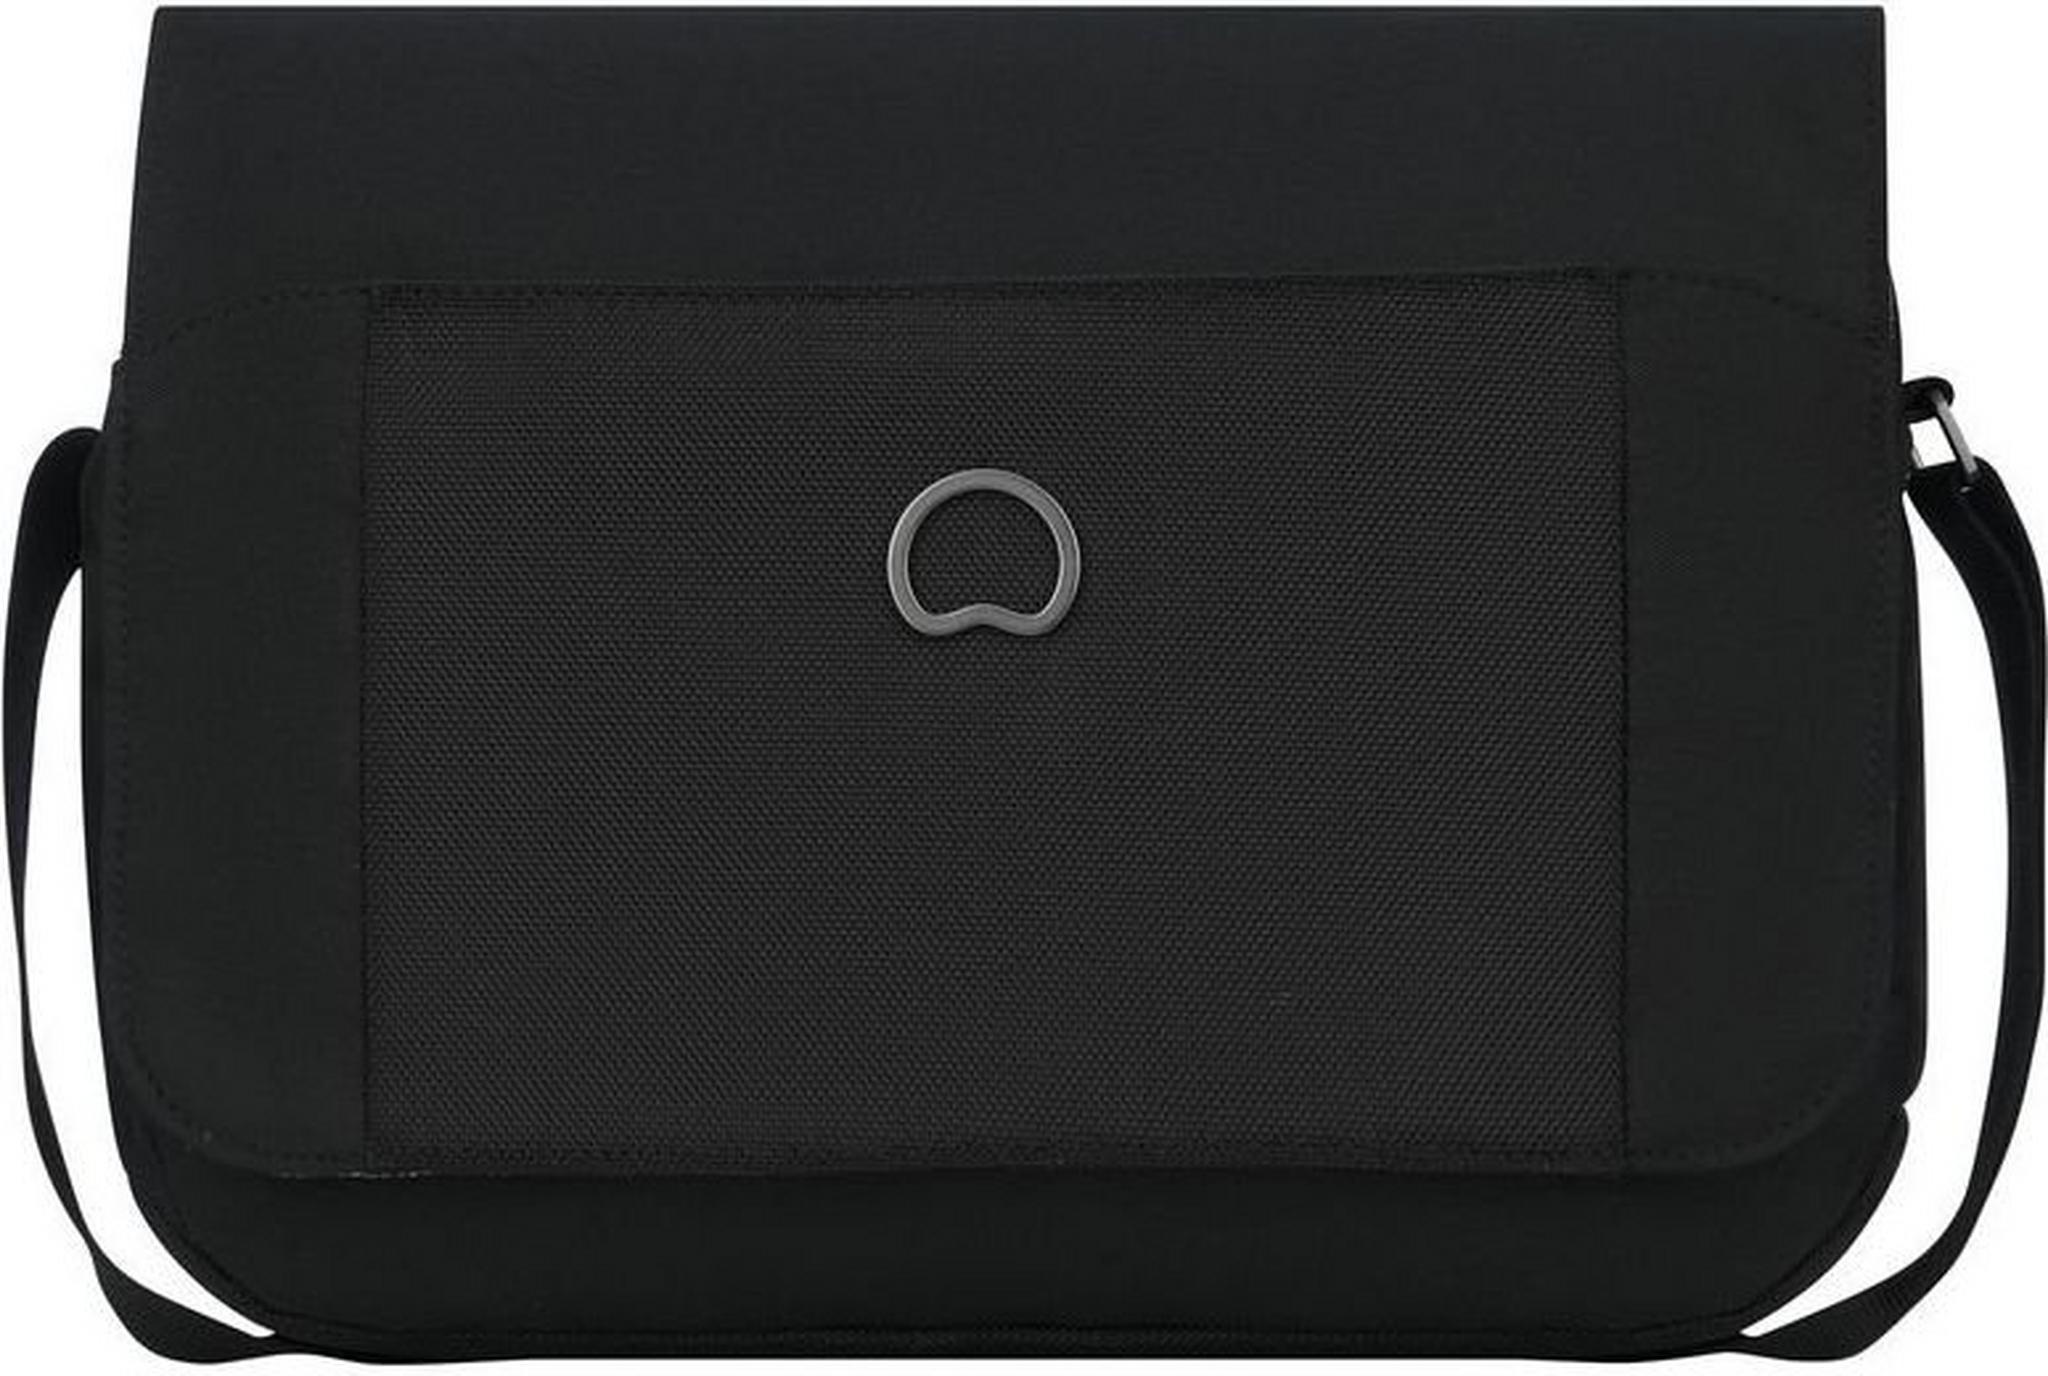 Delsey Picpus 12.9-inch Messenger Laptop Bag (335414500) - Black